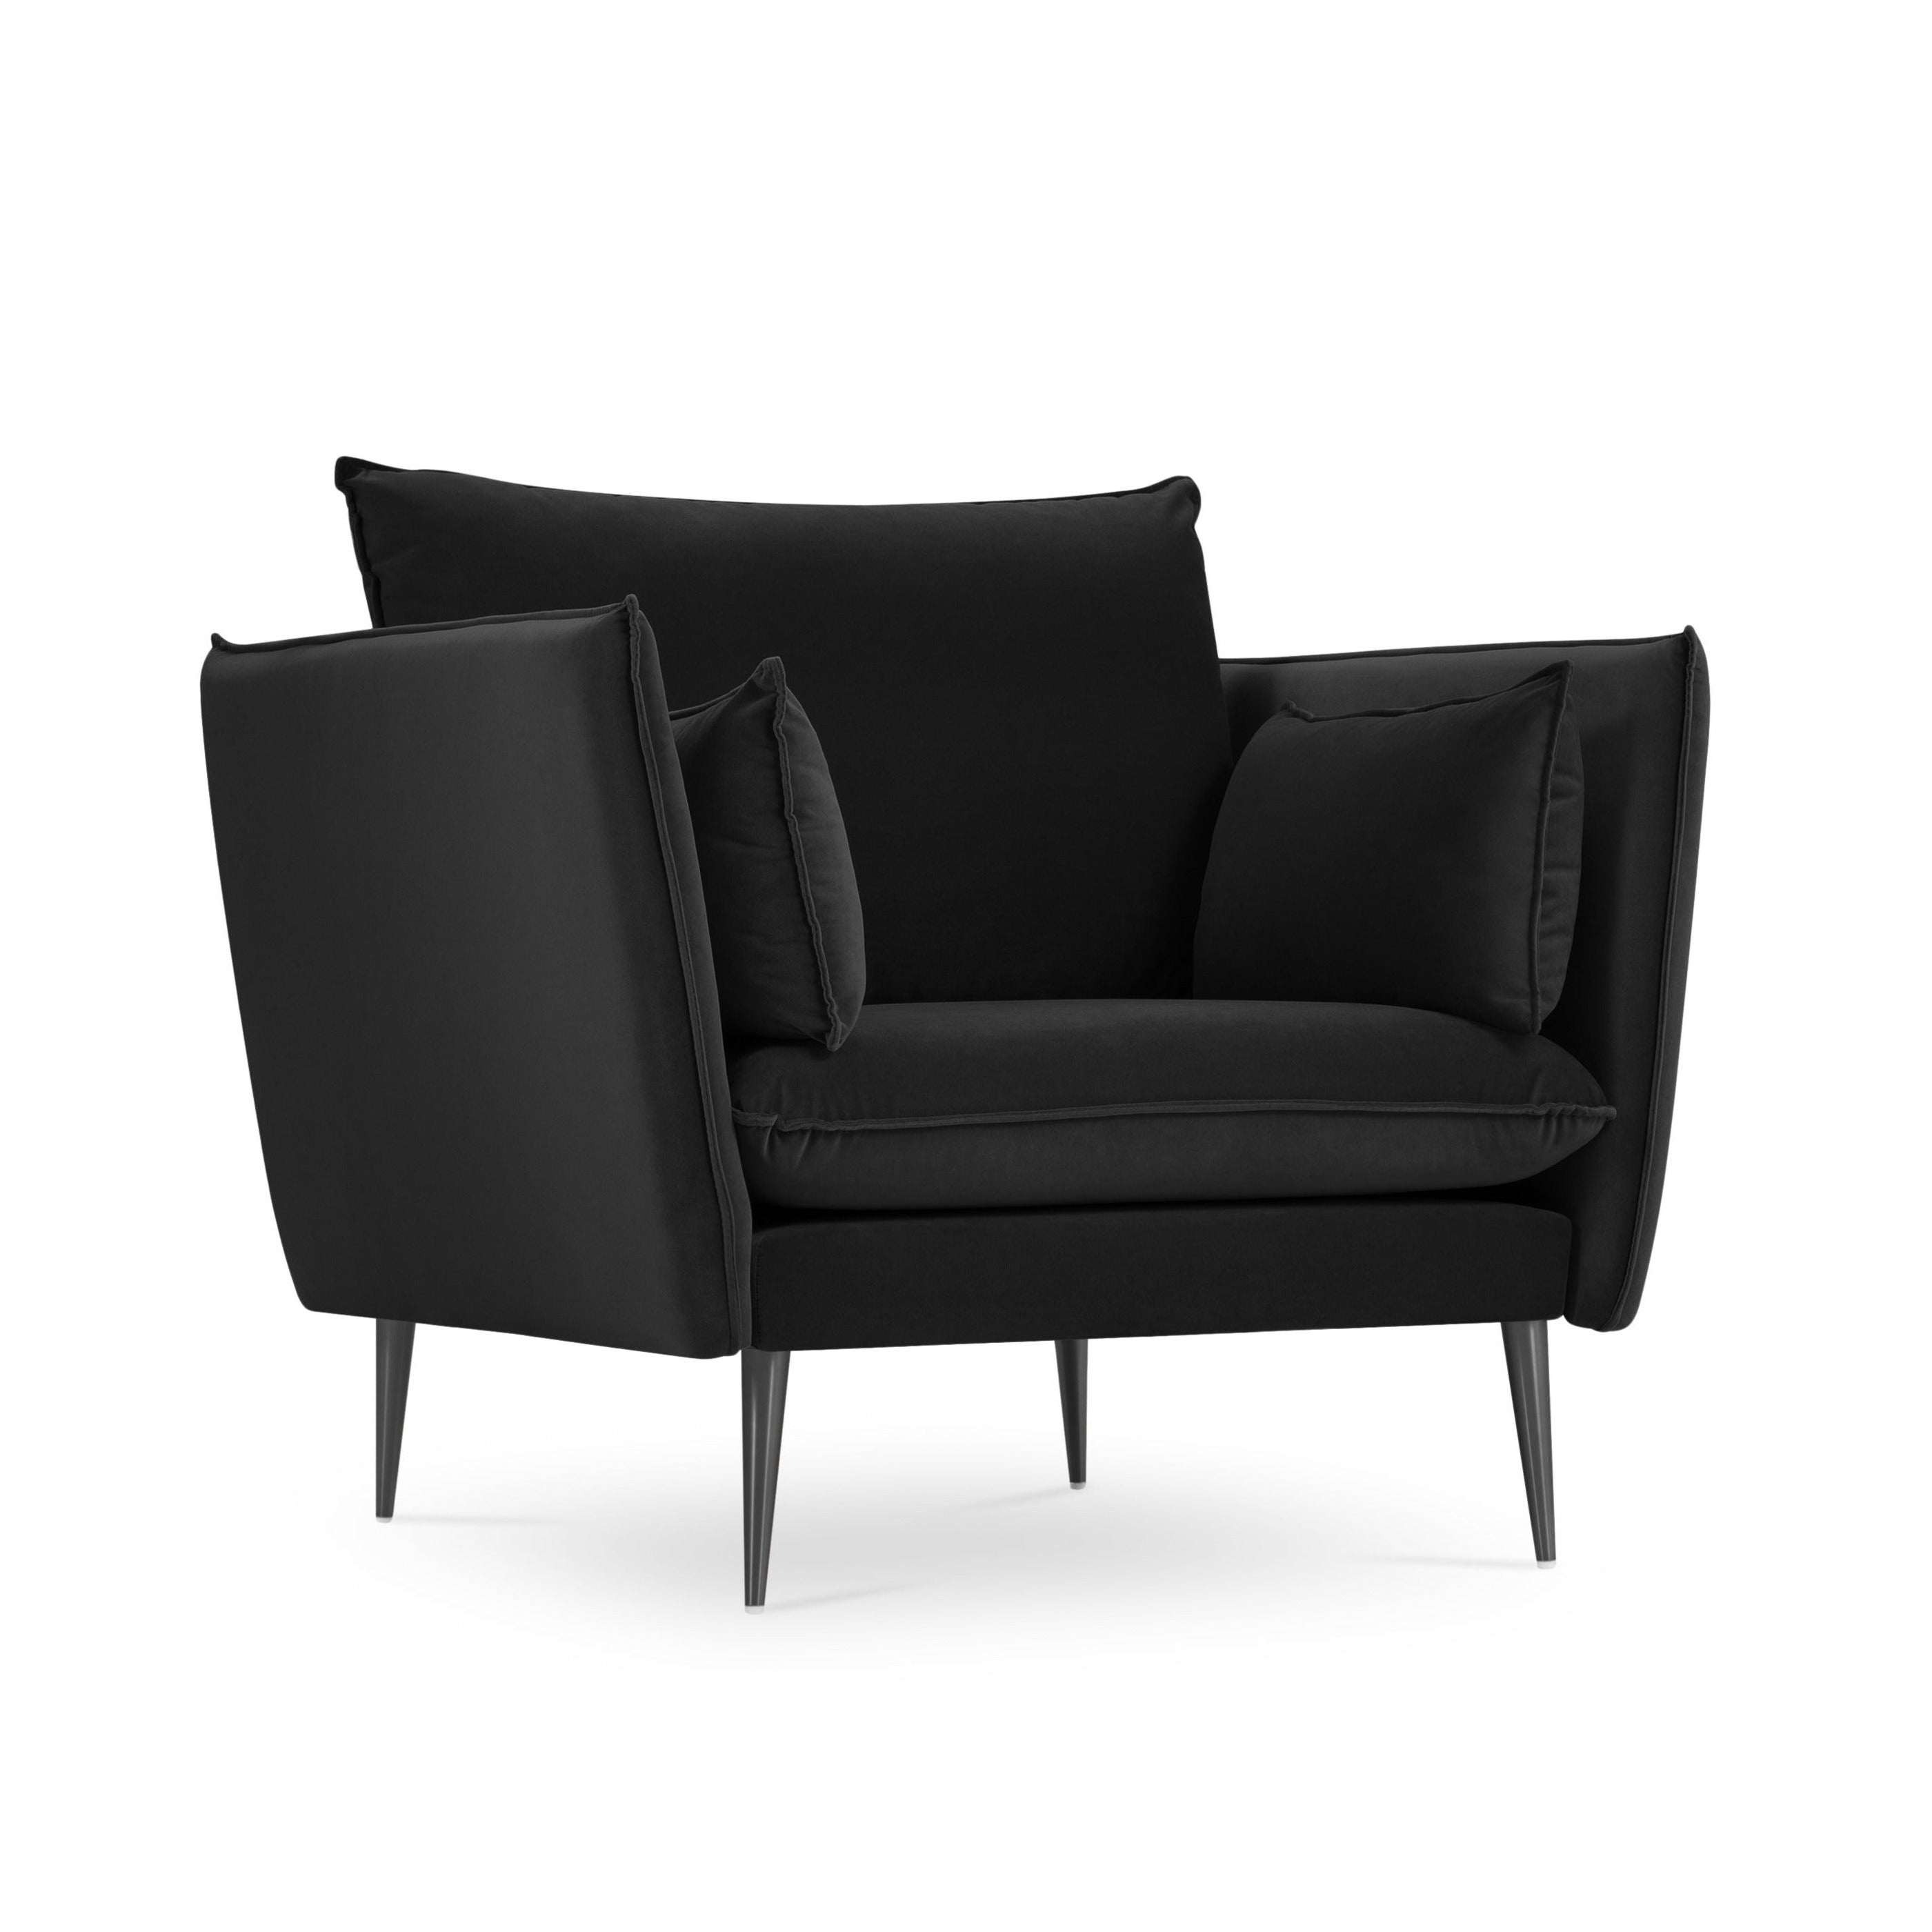 black armchair with a black base